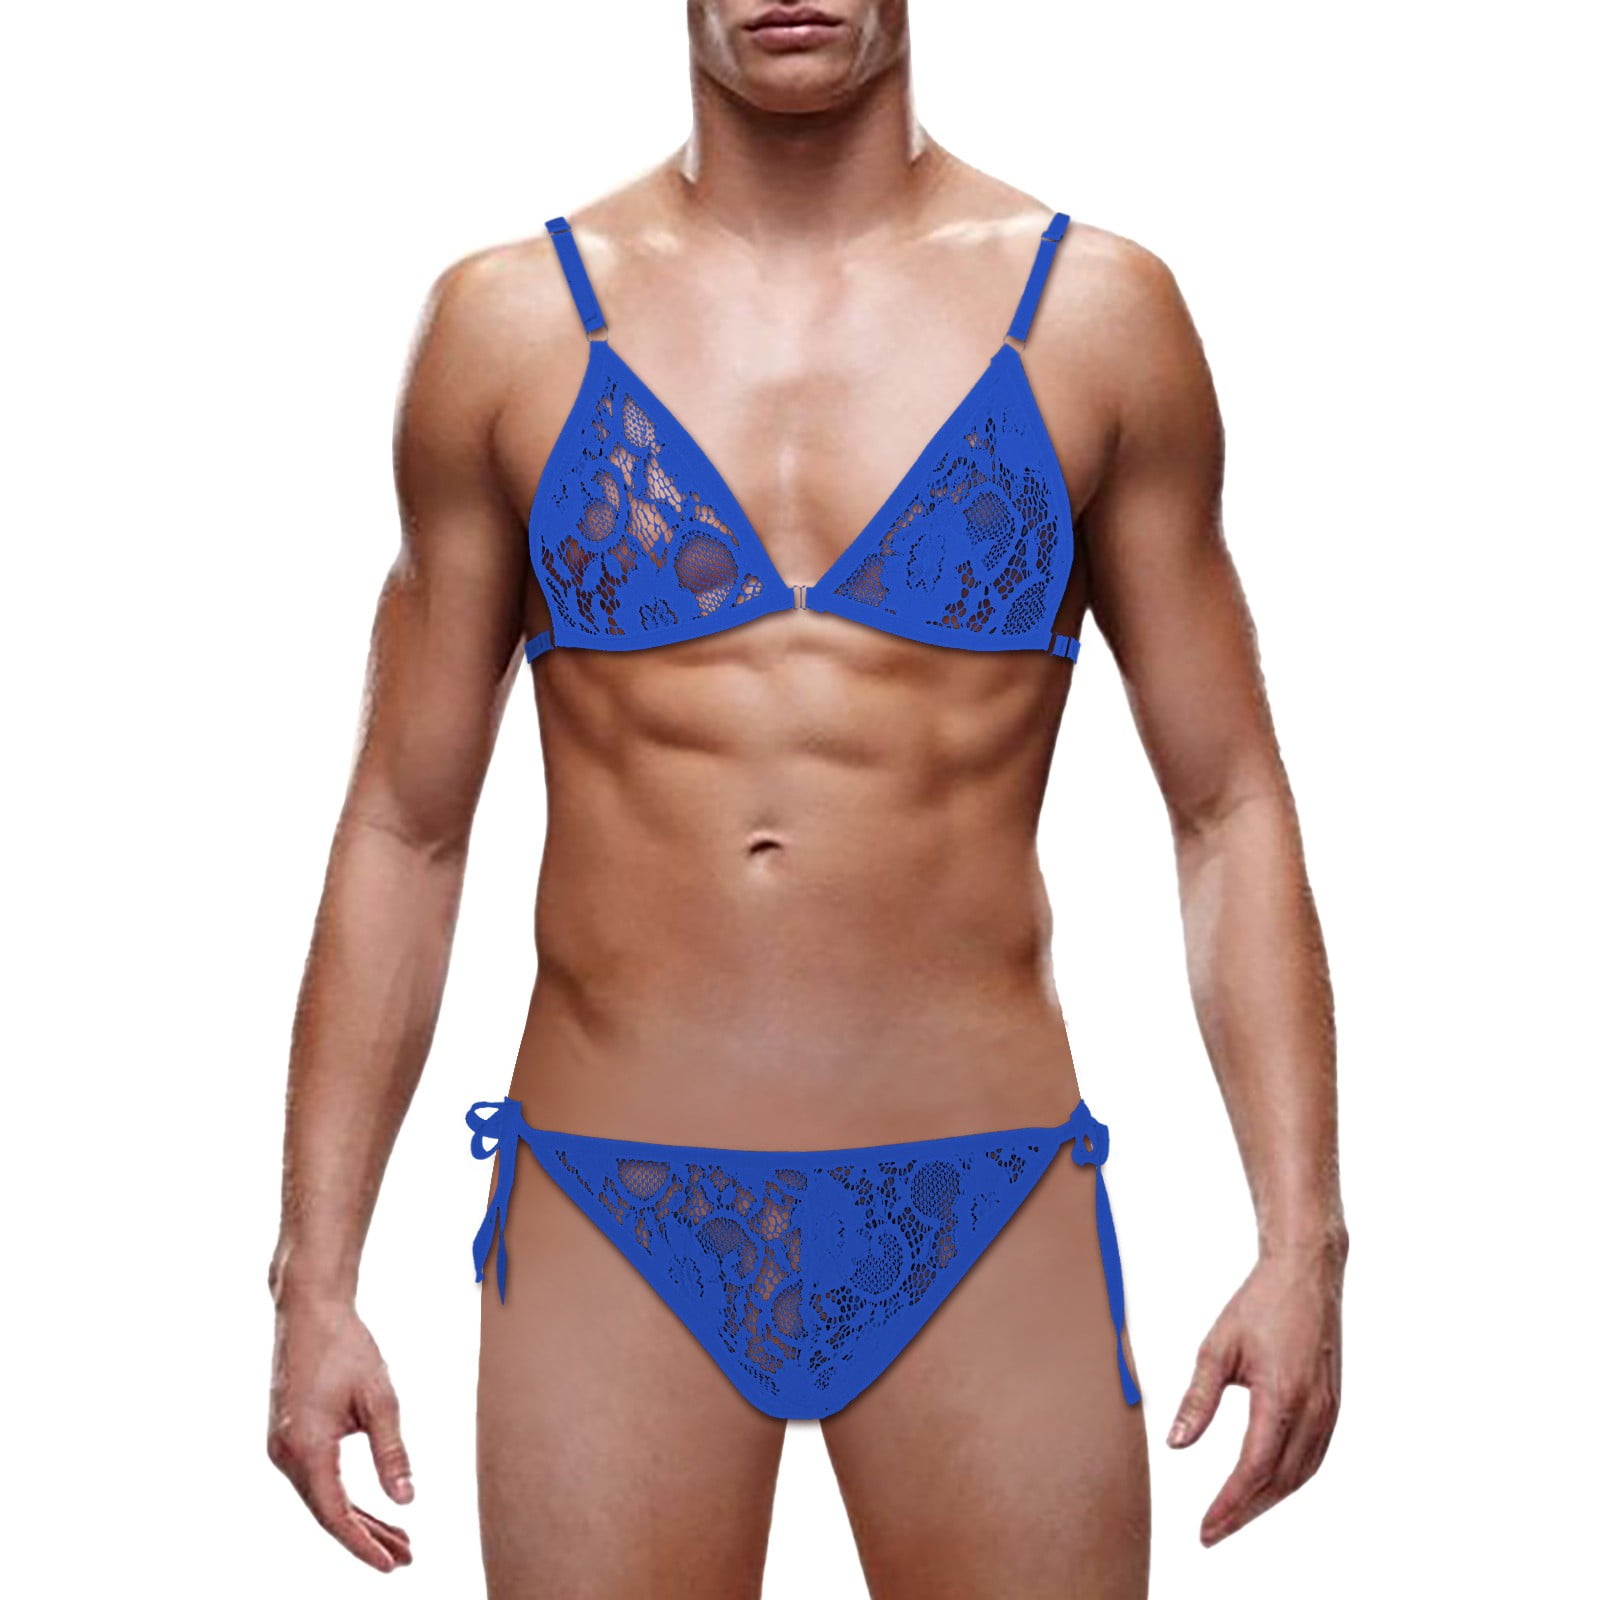 PMUYBHF Men'S Lace Bikini Lace Up Set See Through Adjustable One Size  Swimwear Shoulder Strap Fun underwear Womens underwear Packs Thongs  Lingerie for